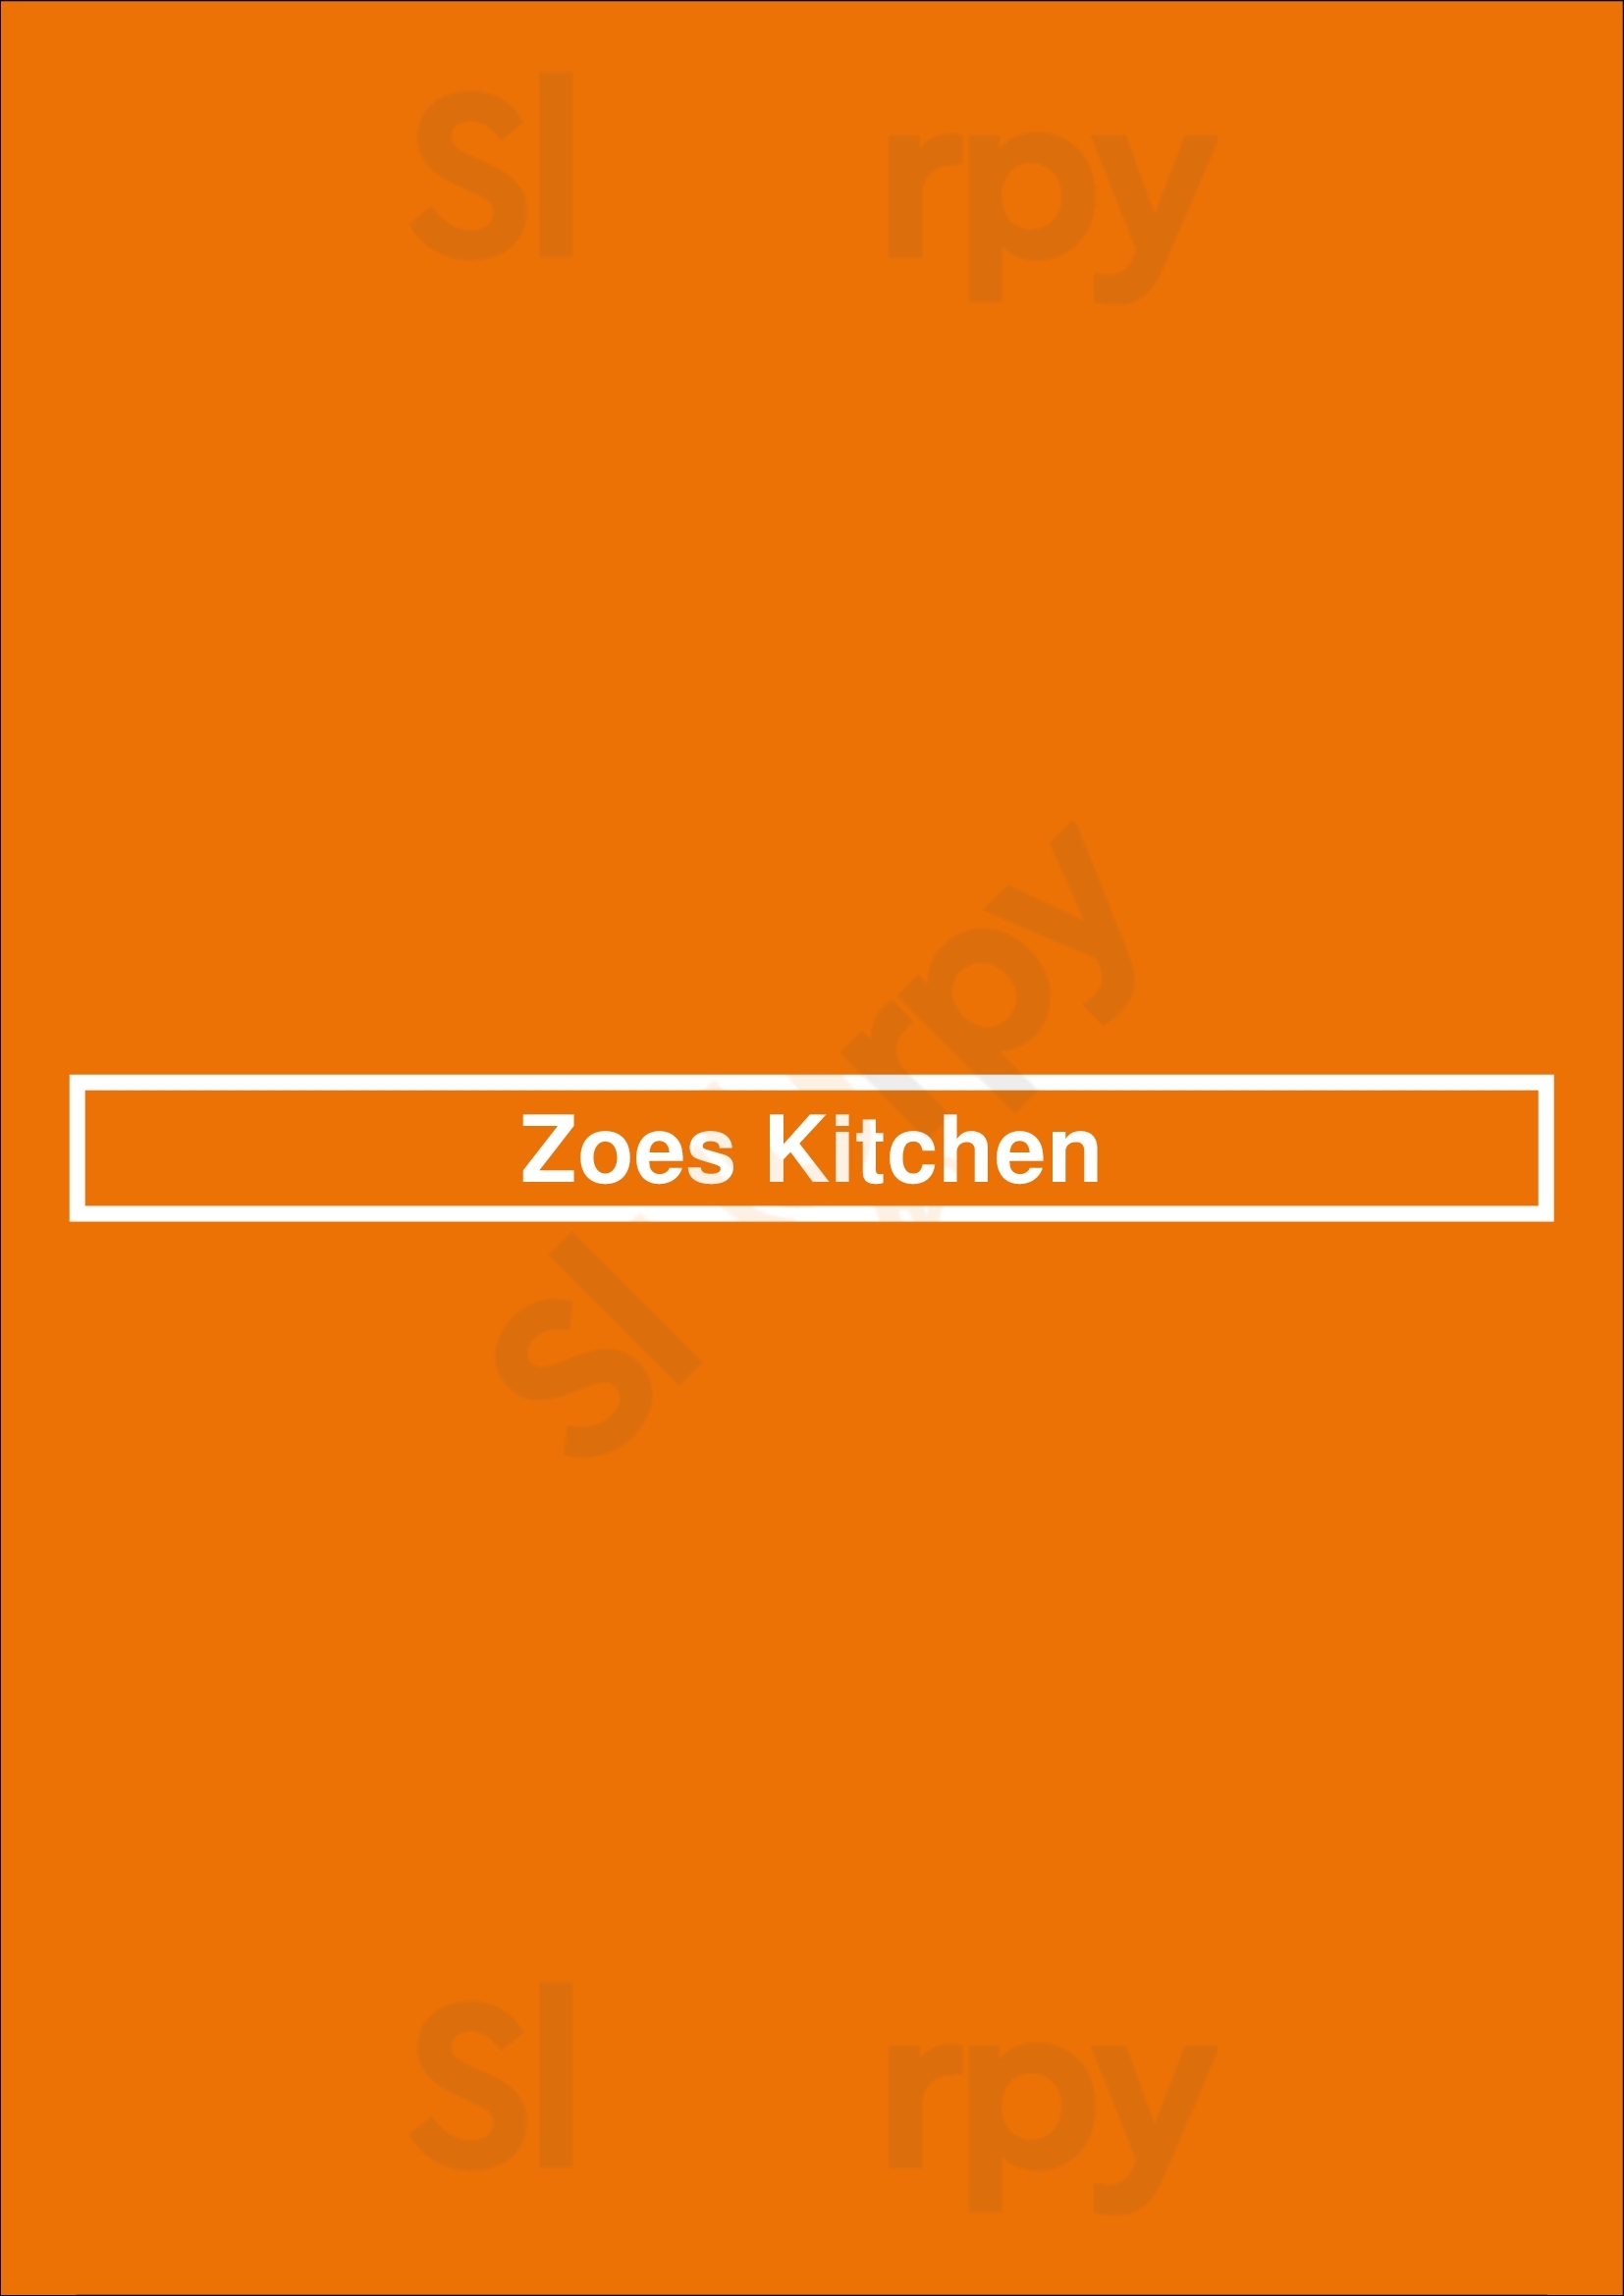 Zoes Kitchen Plano Menu - 1